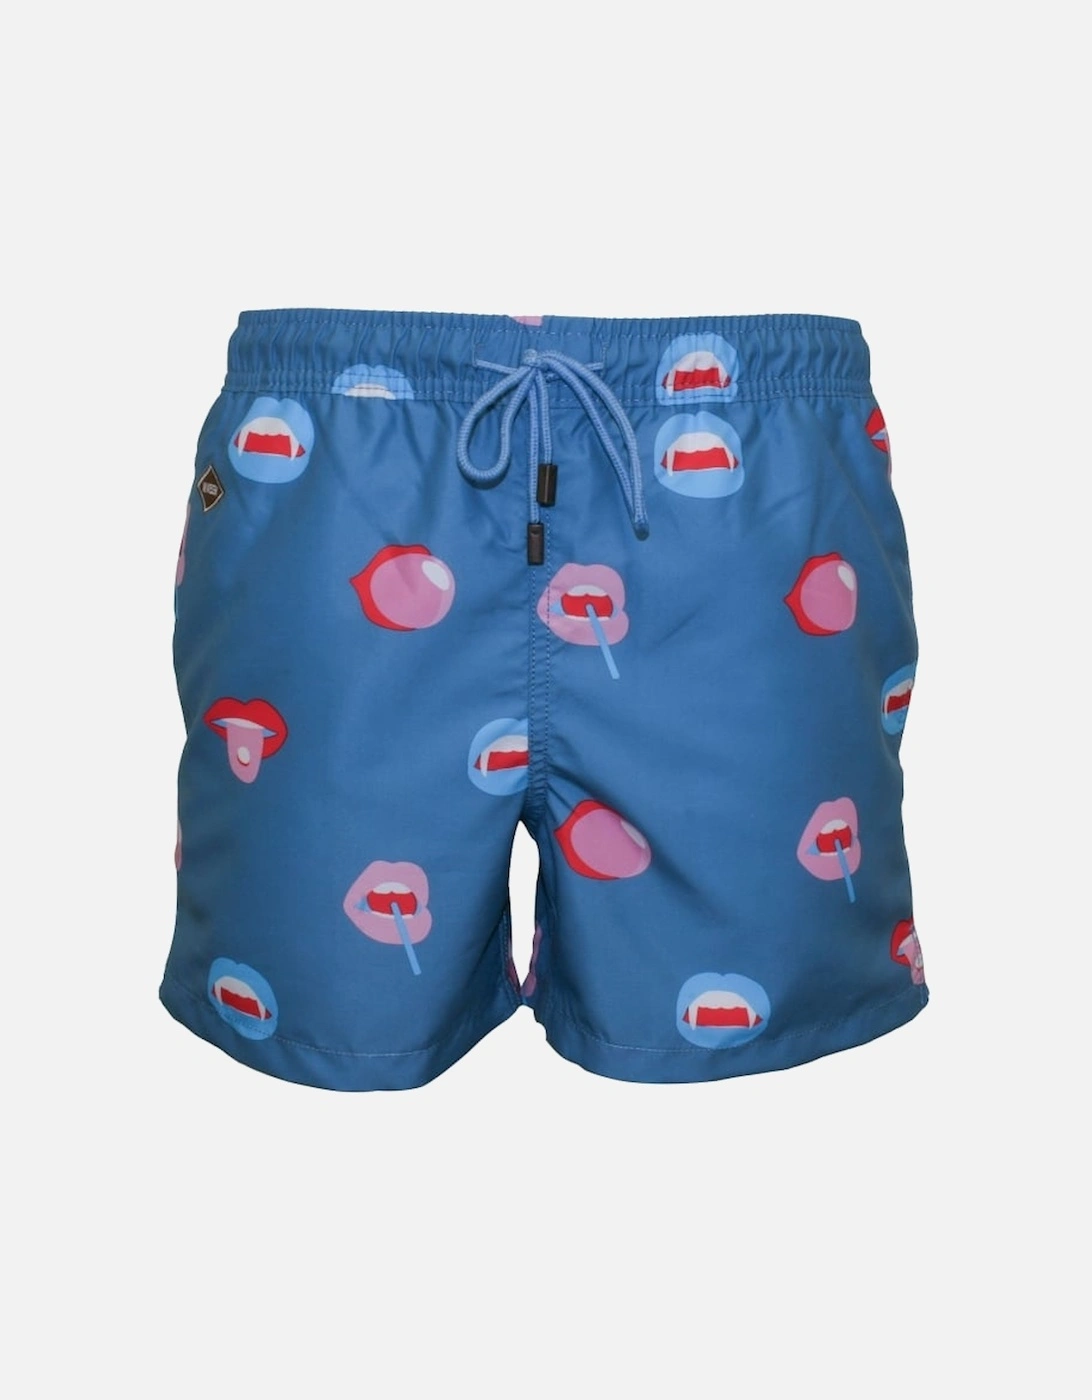 Big Mouth Swim Shorts, Teal Blue, 6 of 5